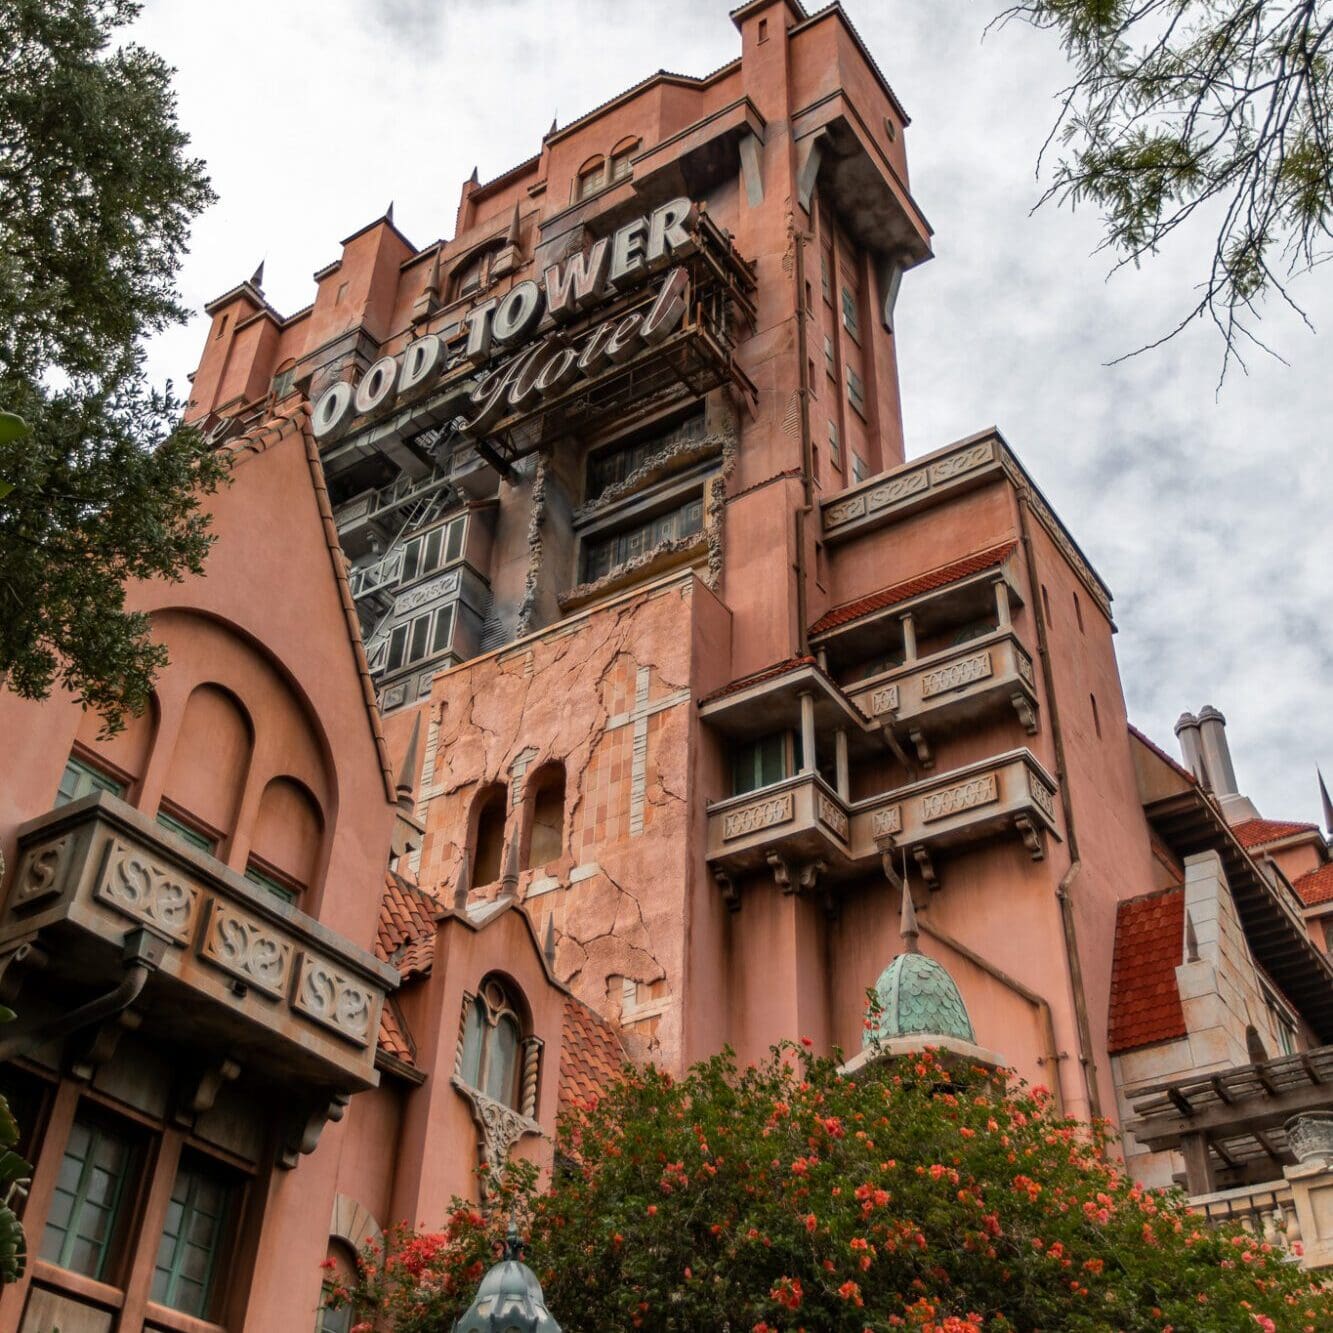 Hollywood Studios Tower of Terror Walt Disney World Florida